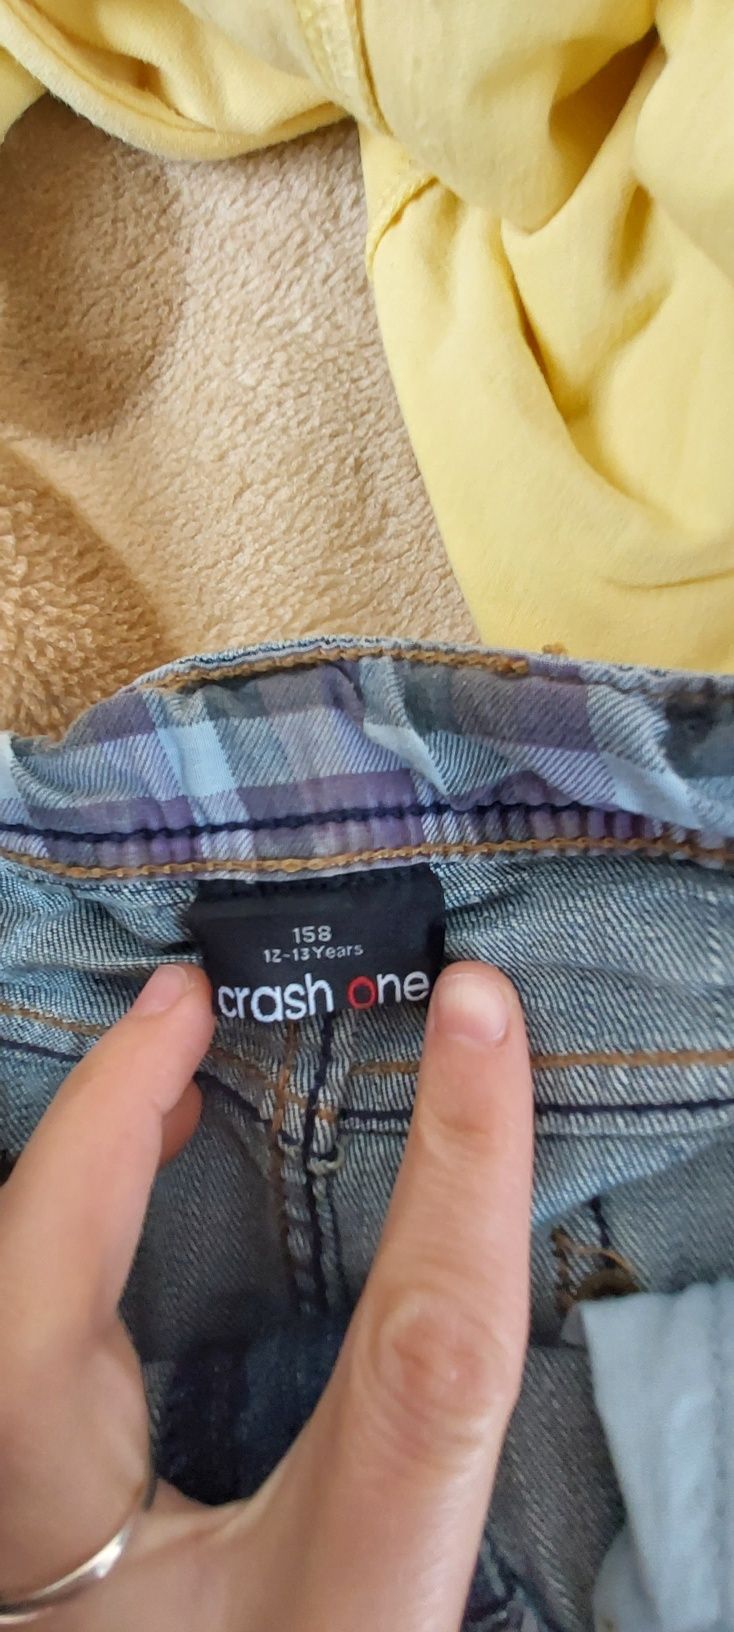 Spódnica mini spódniczka S 158 jeansowa dżinsowa crash one